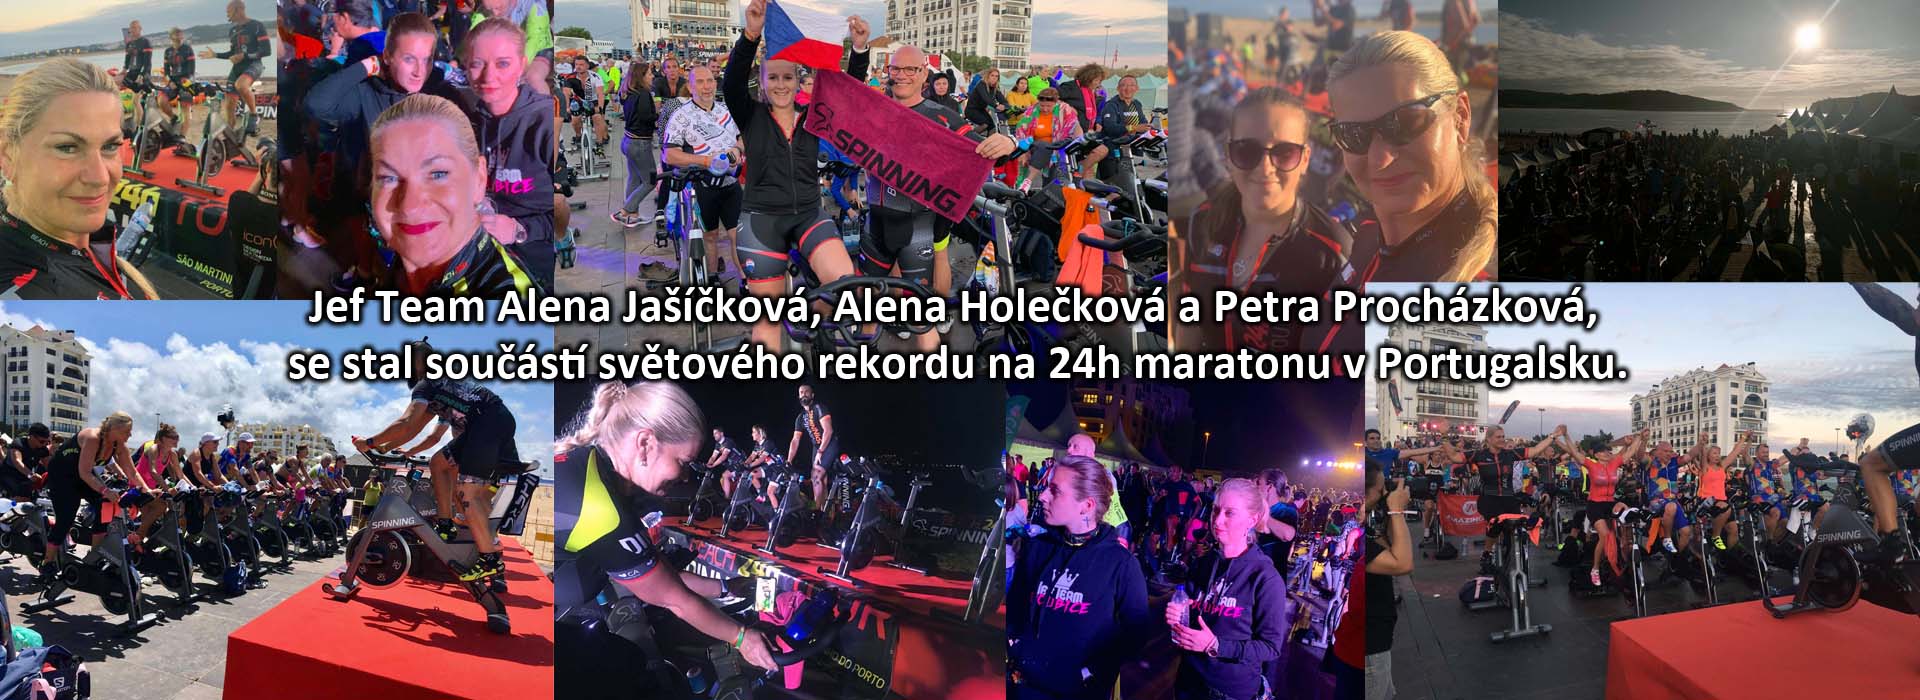 2019 portugalsko 24h maraton karusel